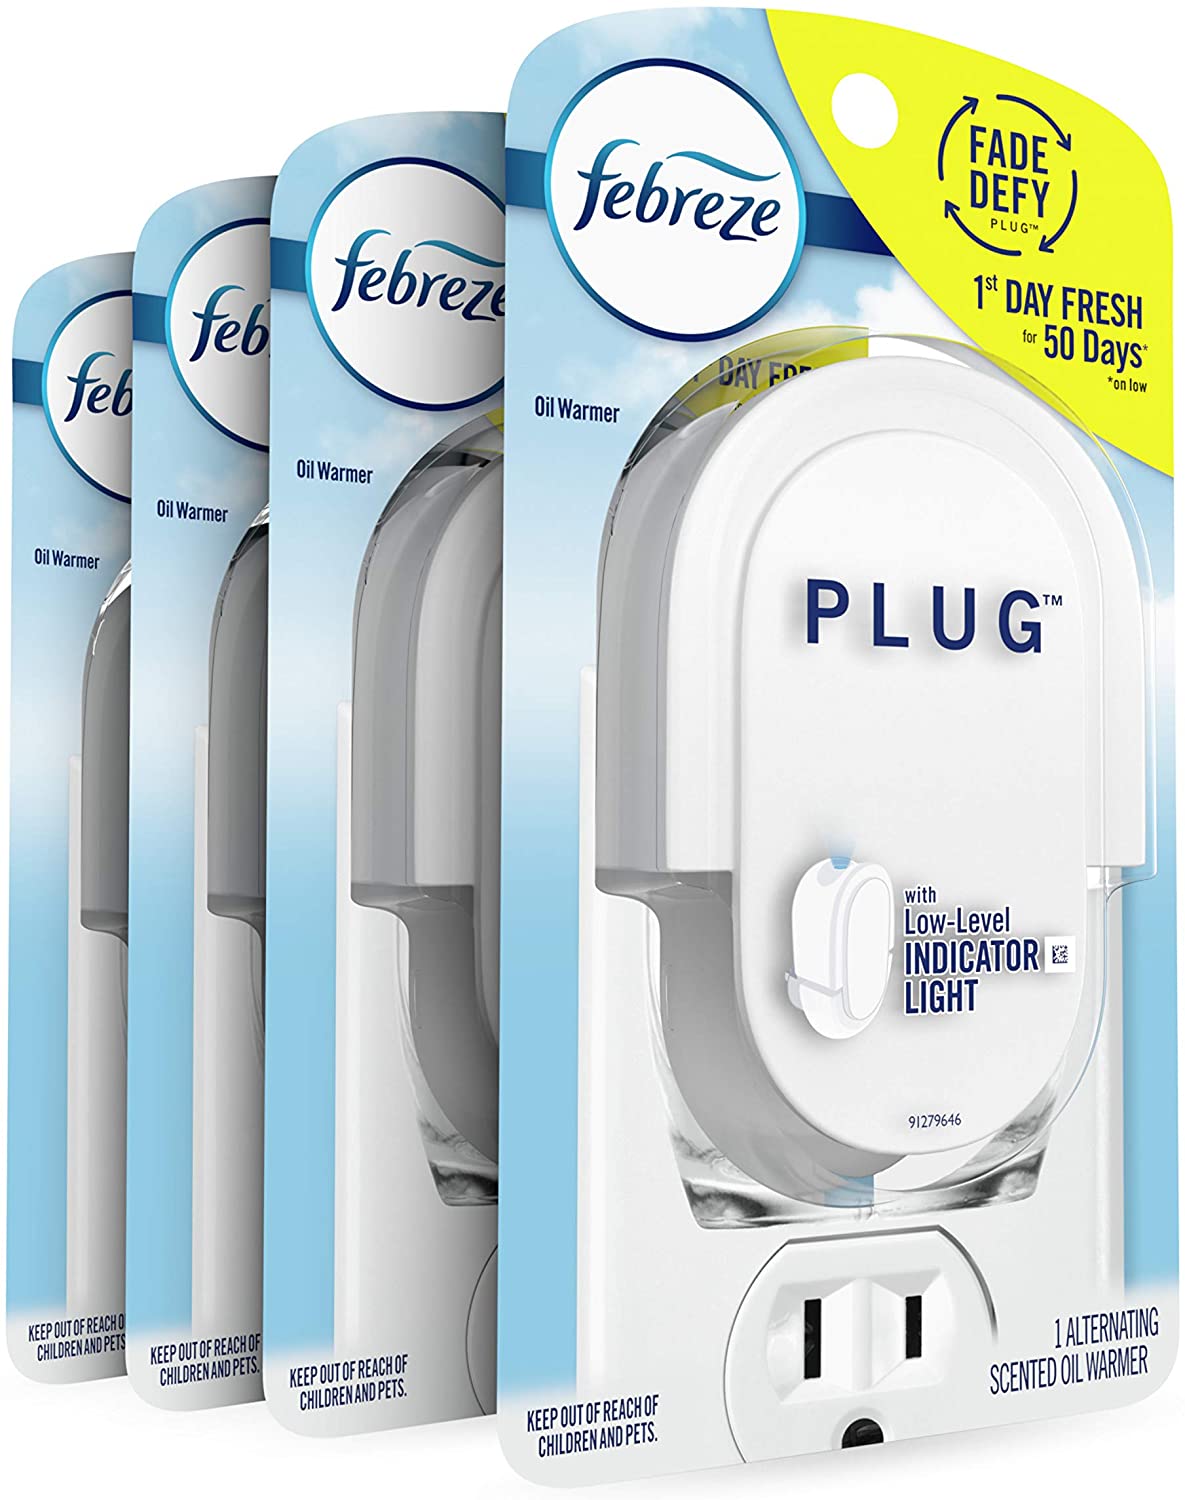 Febreze Odor-eliminating Fade Defy Plug, Scented Oil Warmer (Pack of 4)$10.16